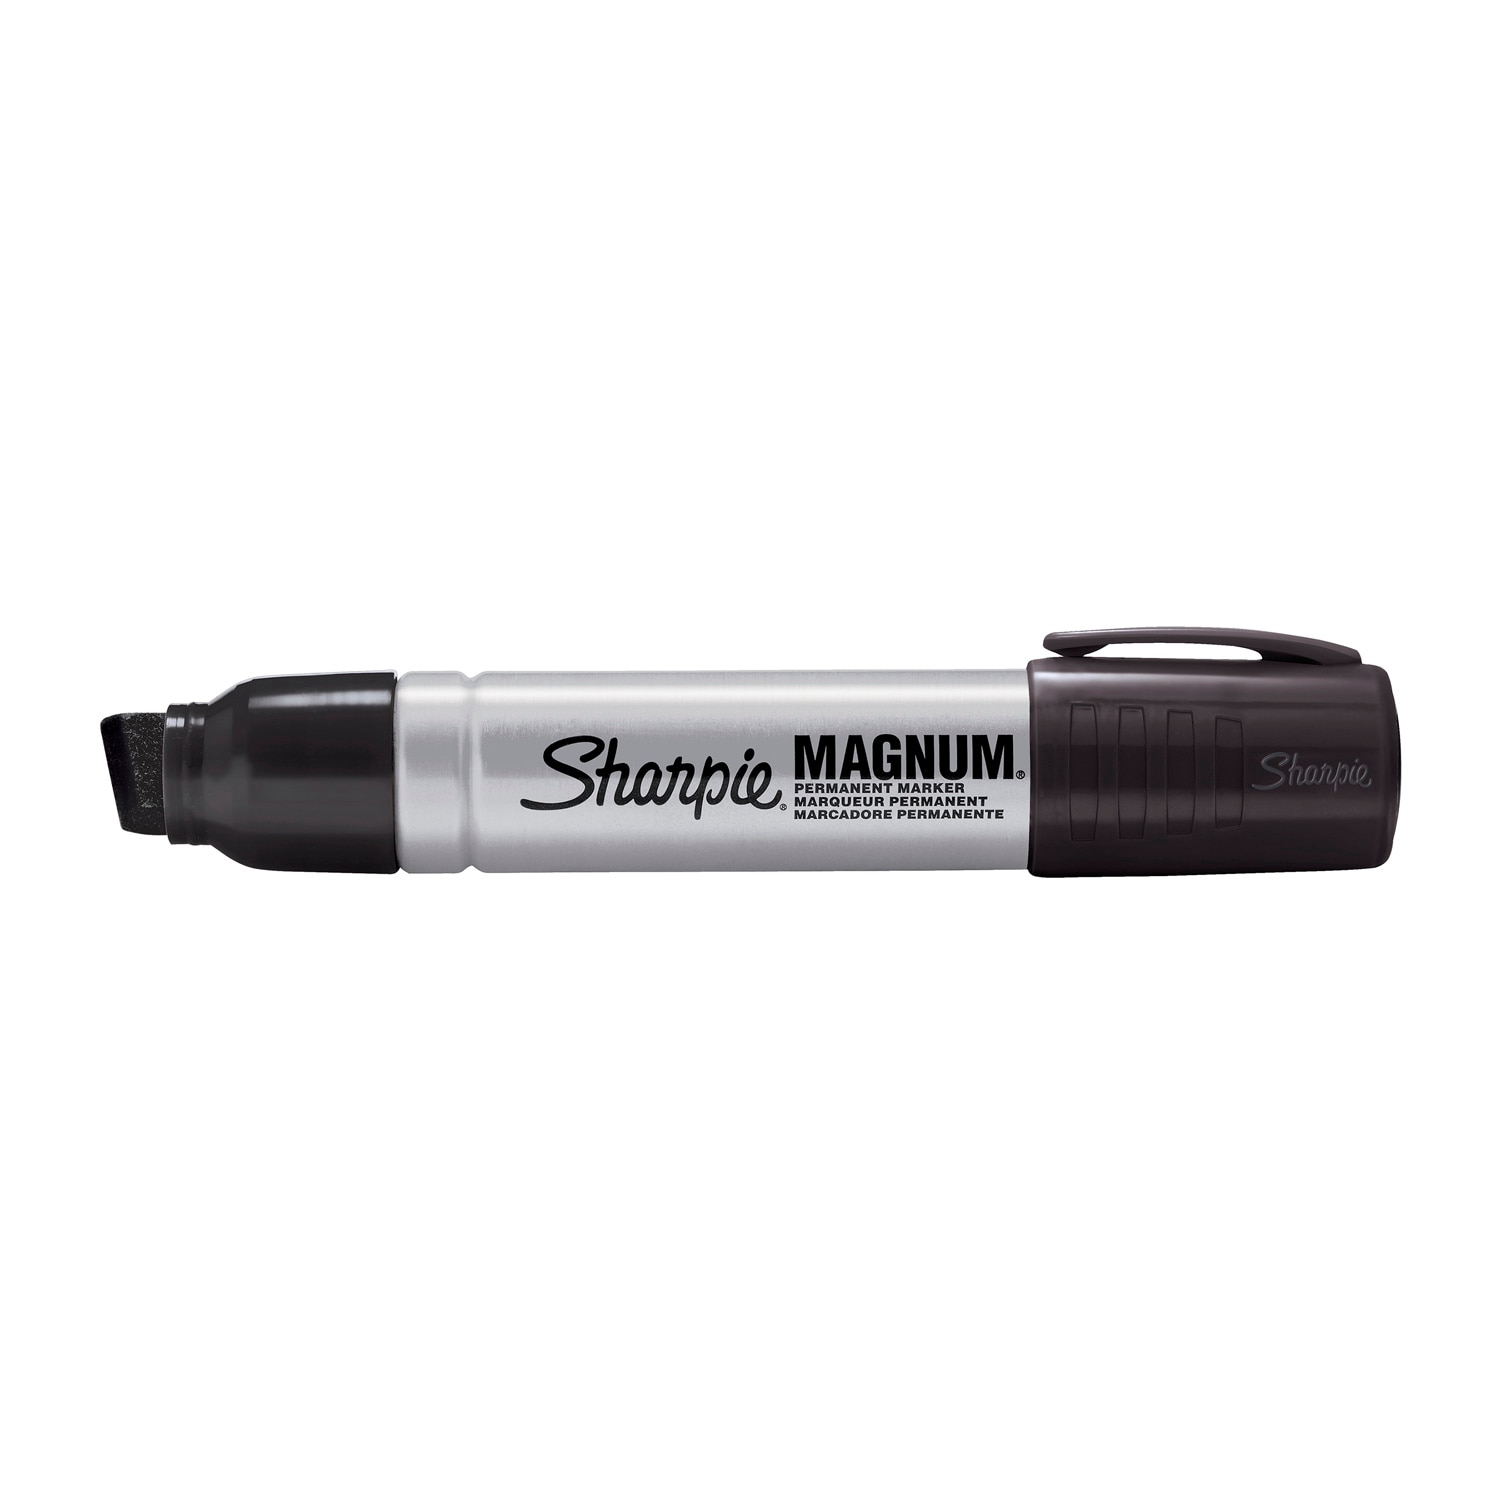 Sharpie Magnum Extra Large Chisel Tip Black Permanent Marker in